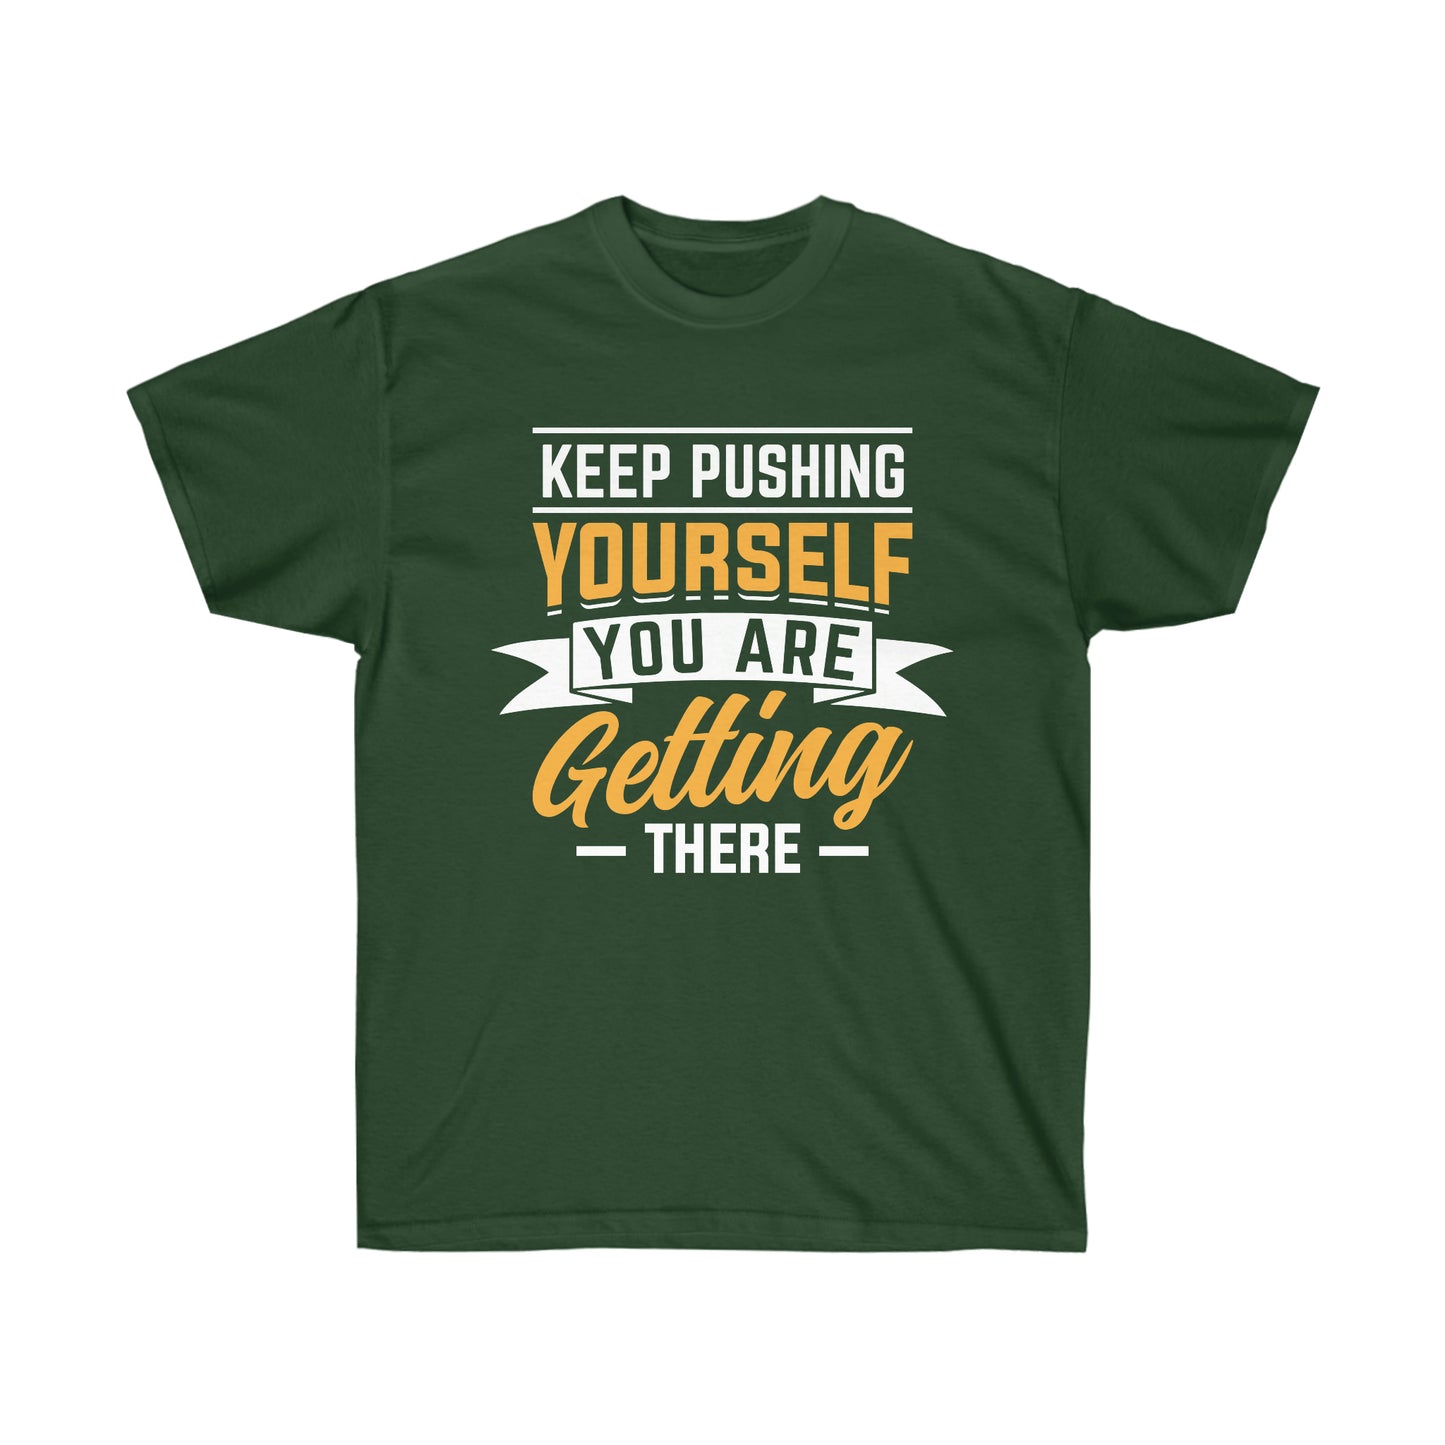 Keep pushing yourself motivational tshirt